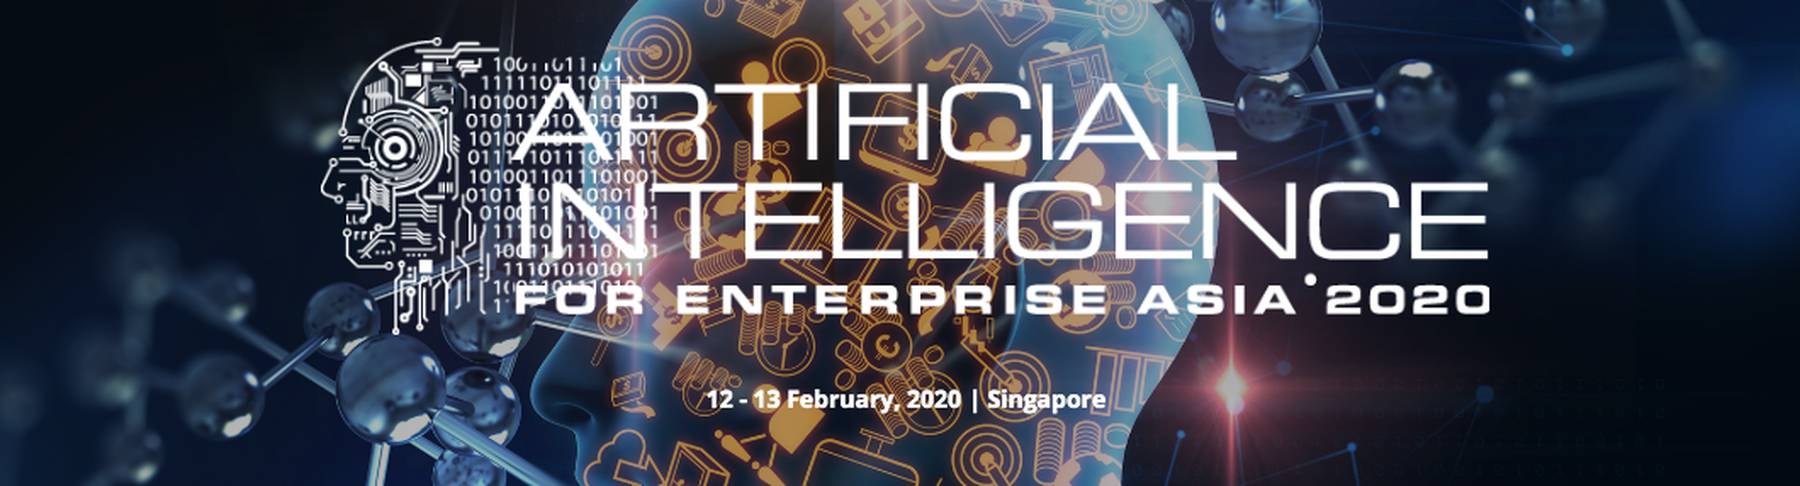 Artificial Intelligence for Enterprise Asia Singapore 2020